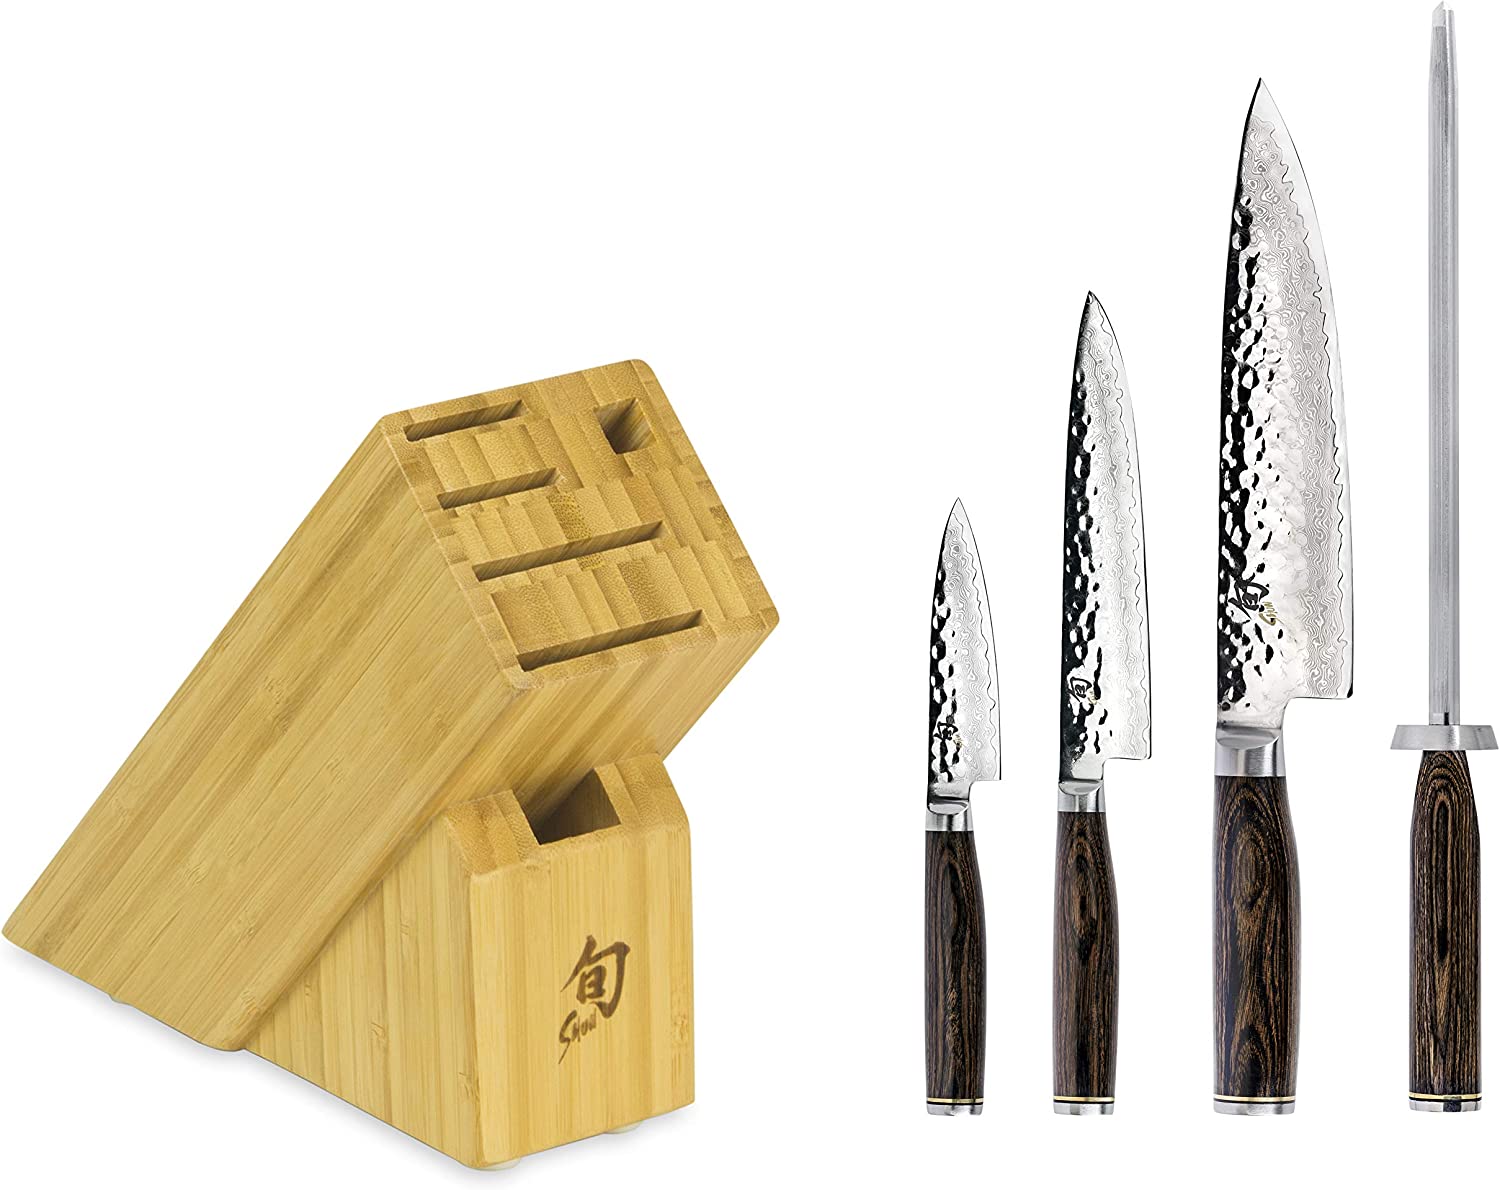 Shun Premier 5-Piece Starter Block Set, Includes 8” Chef's Knife, 4” Paring Knife, 6.5” Utility Knife, & Honing Steel